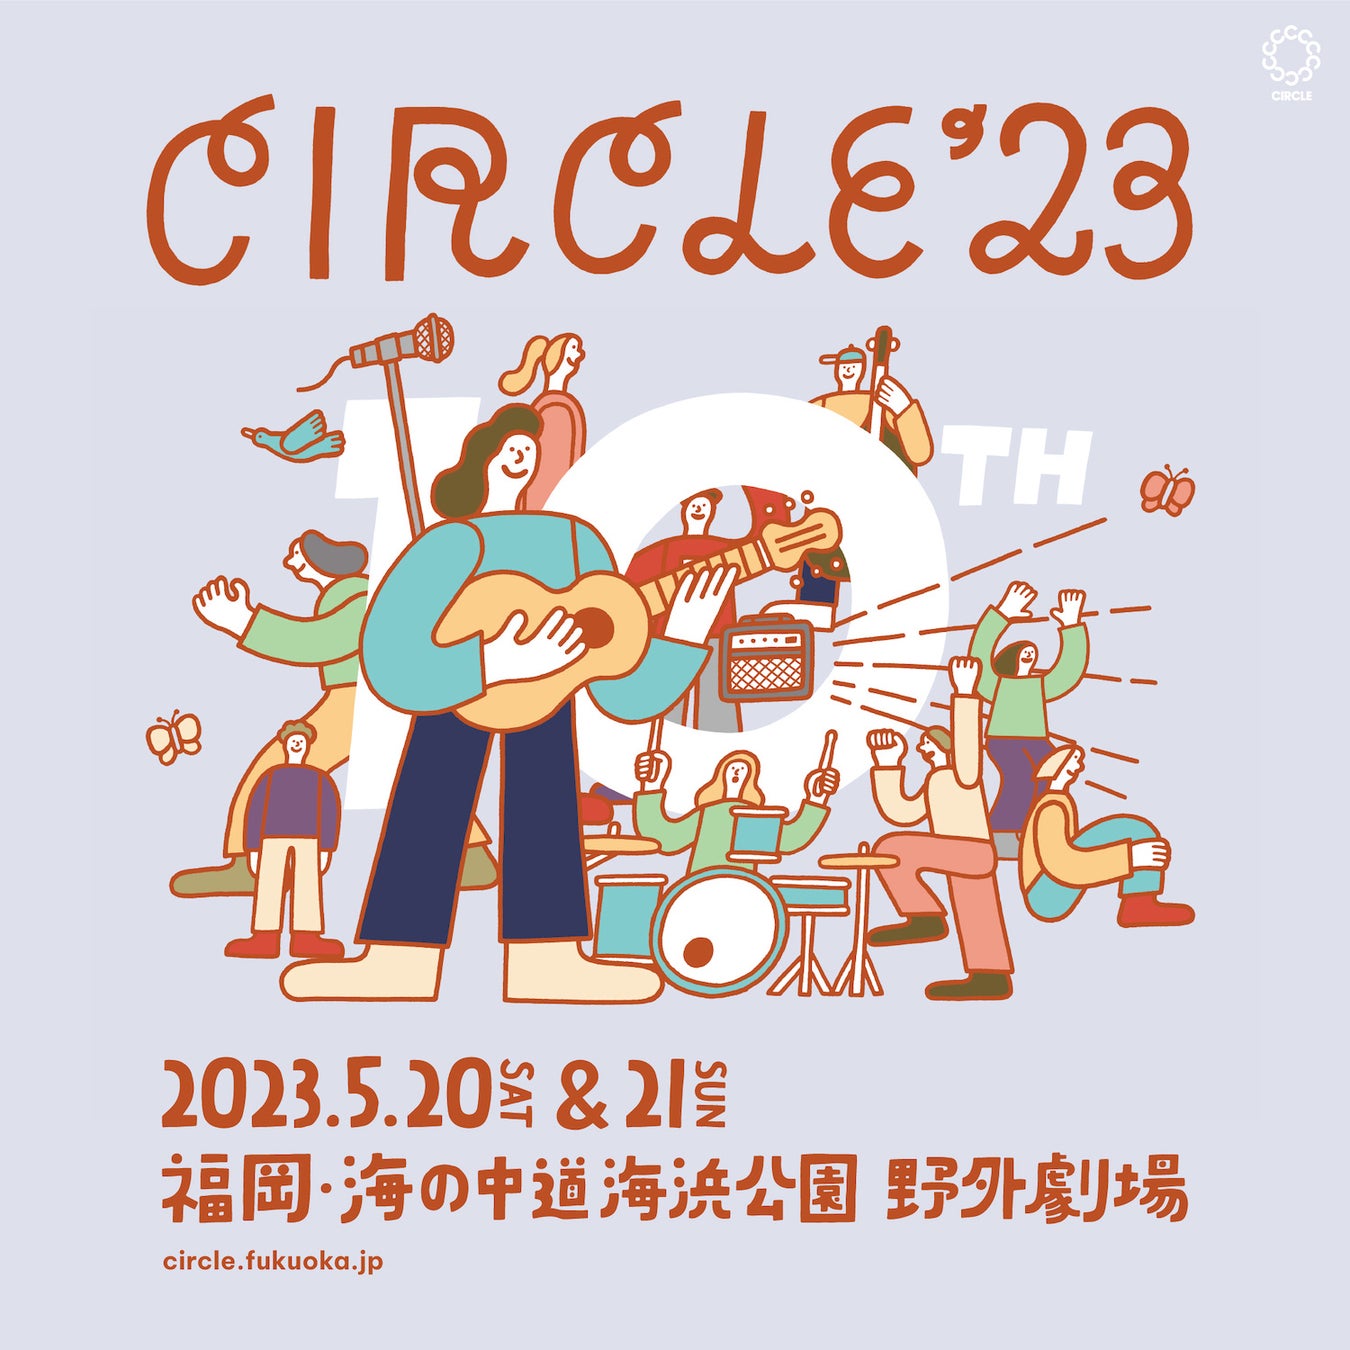 CIRCLE’23